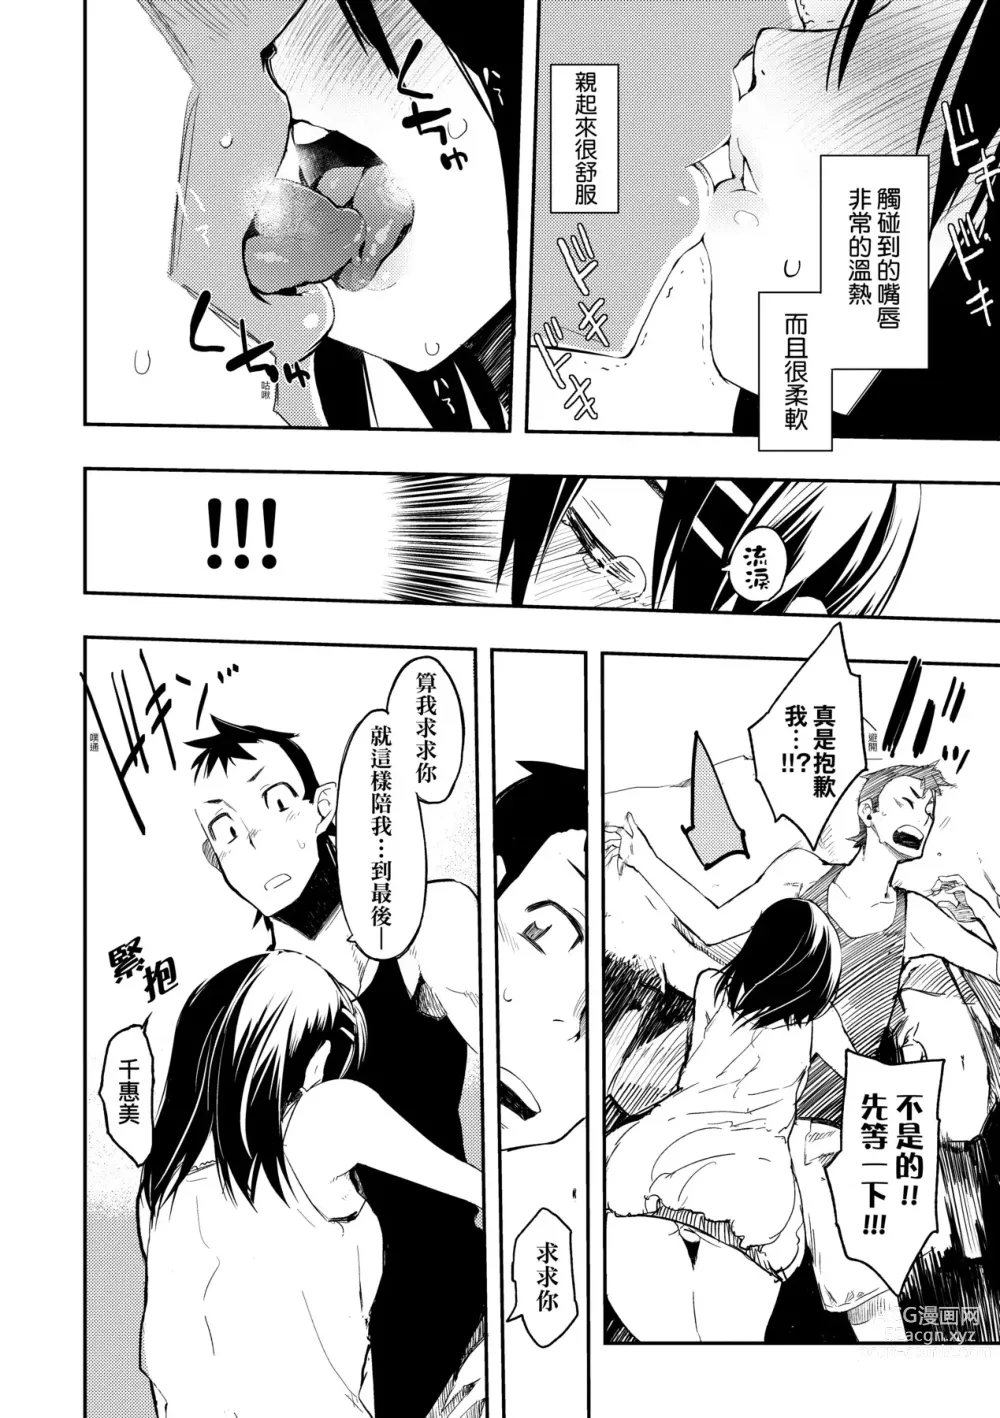 Page 203 of manga 眼眸令我陶醉 (decensored)